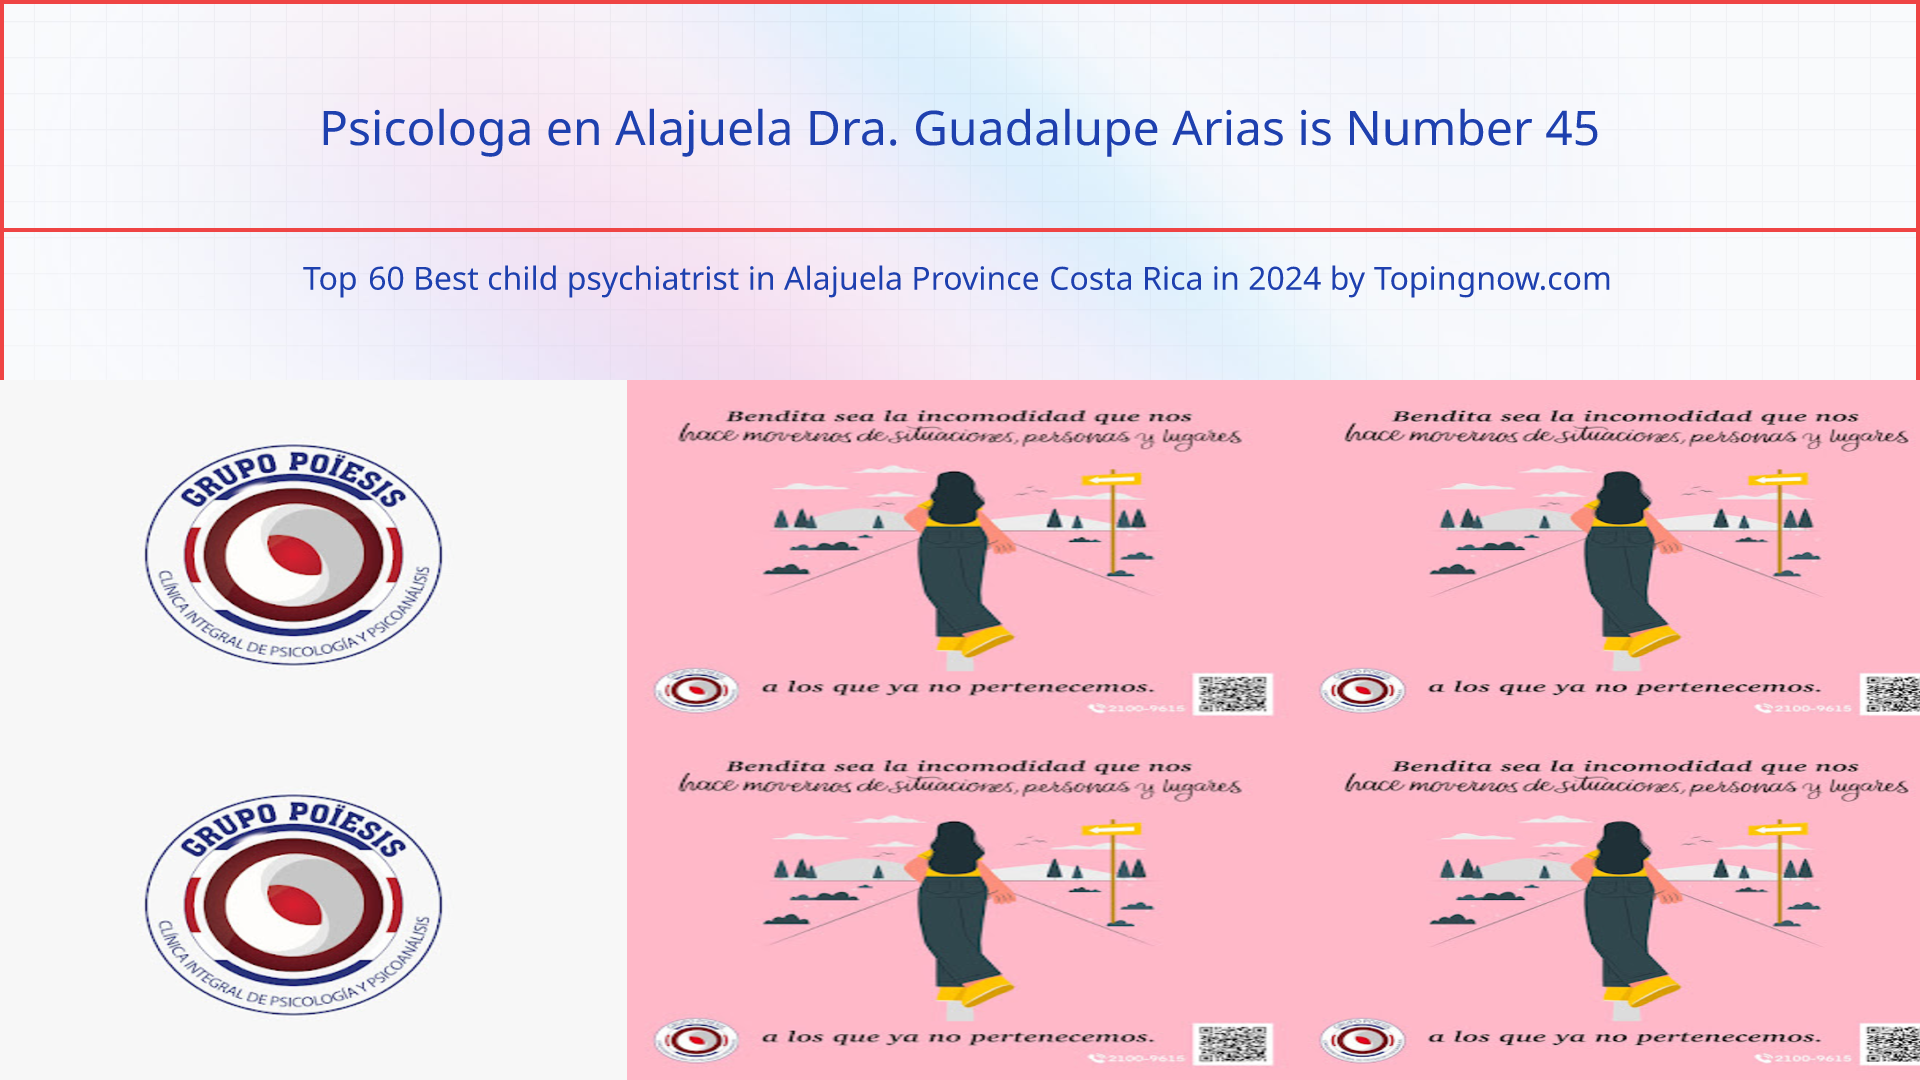 Psicologa en Alajuela Dra. Guadalupe Arias: Top 60 Best child psychiatrist in Alajuela Province Costa Rica in 2024